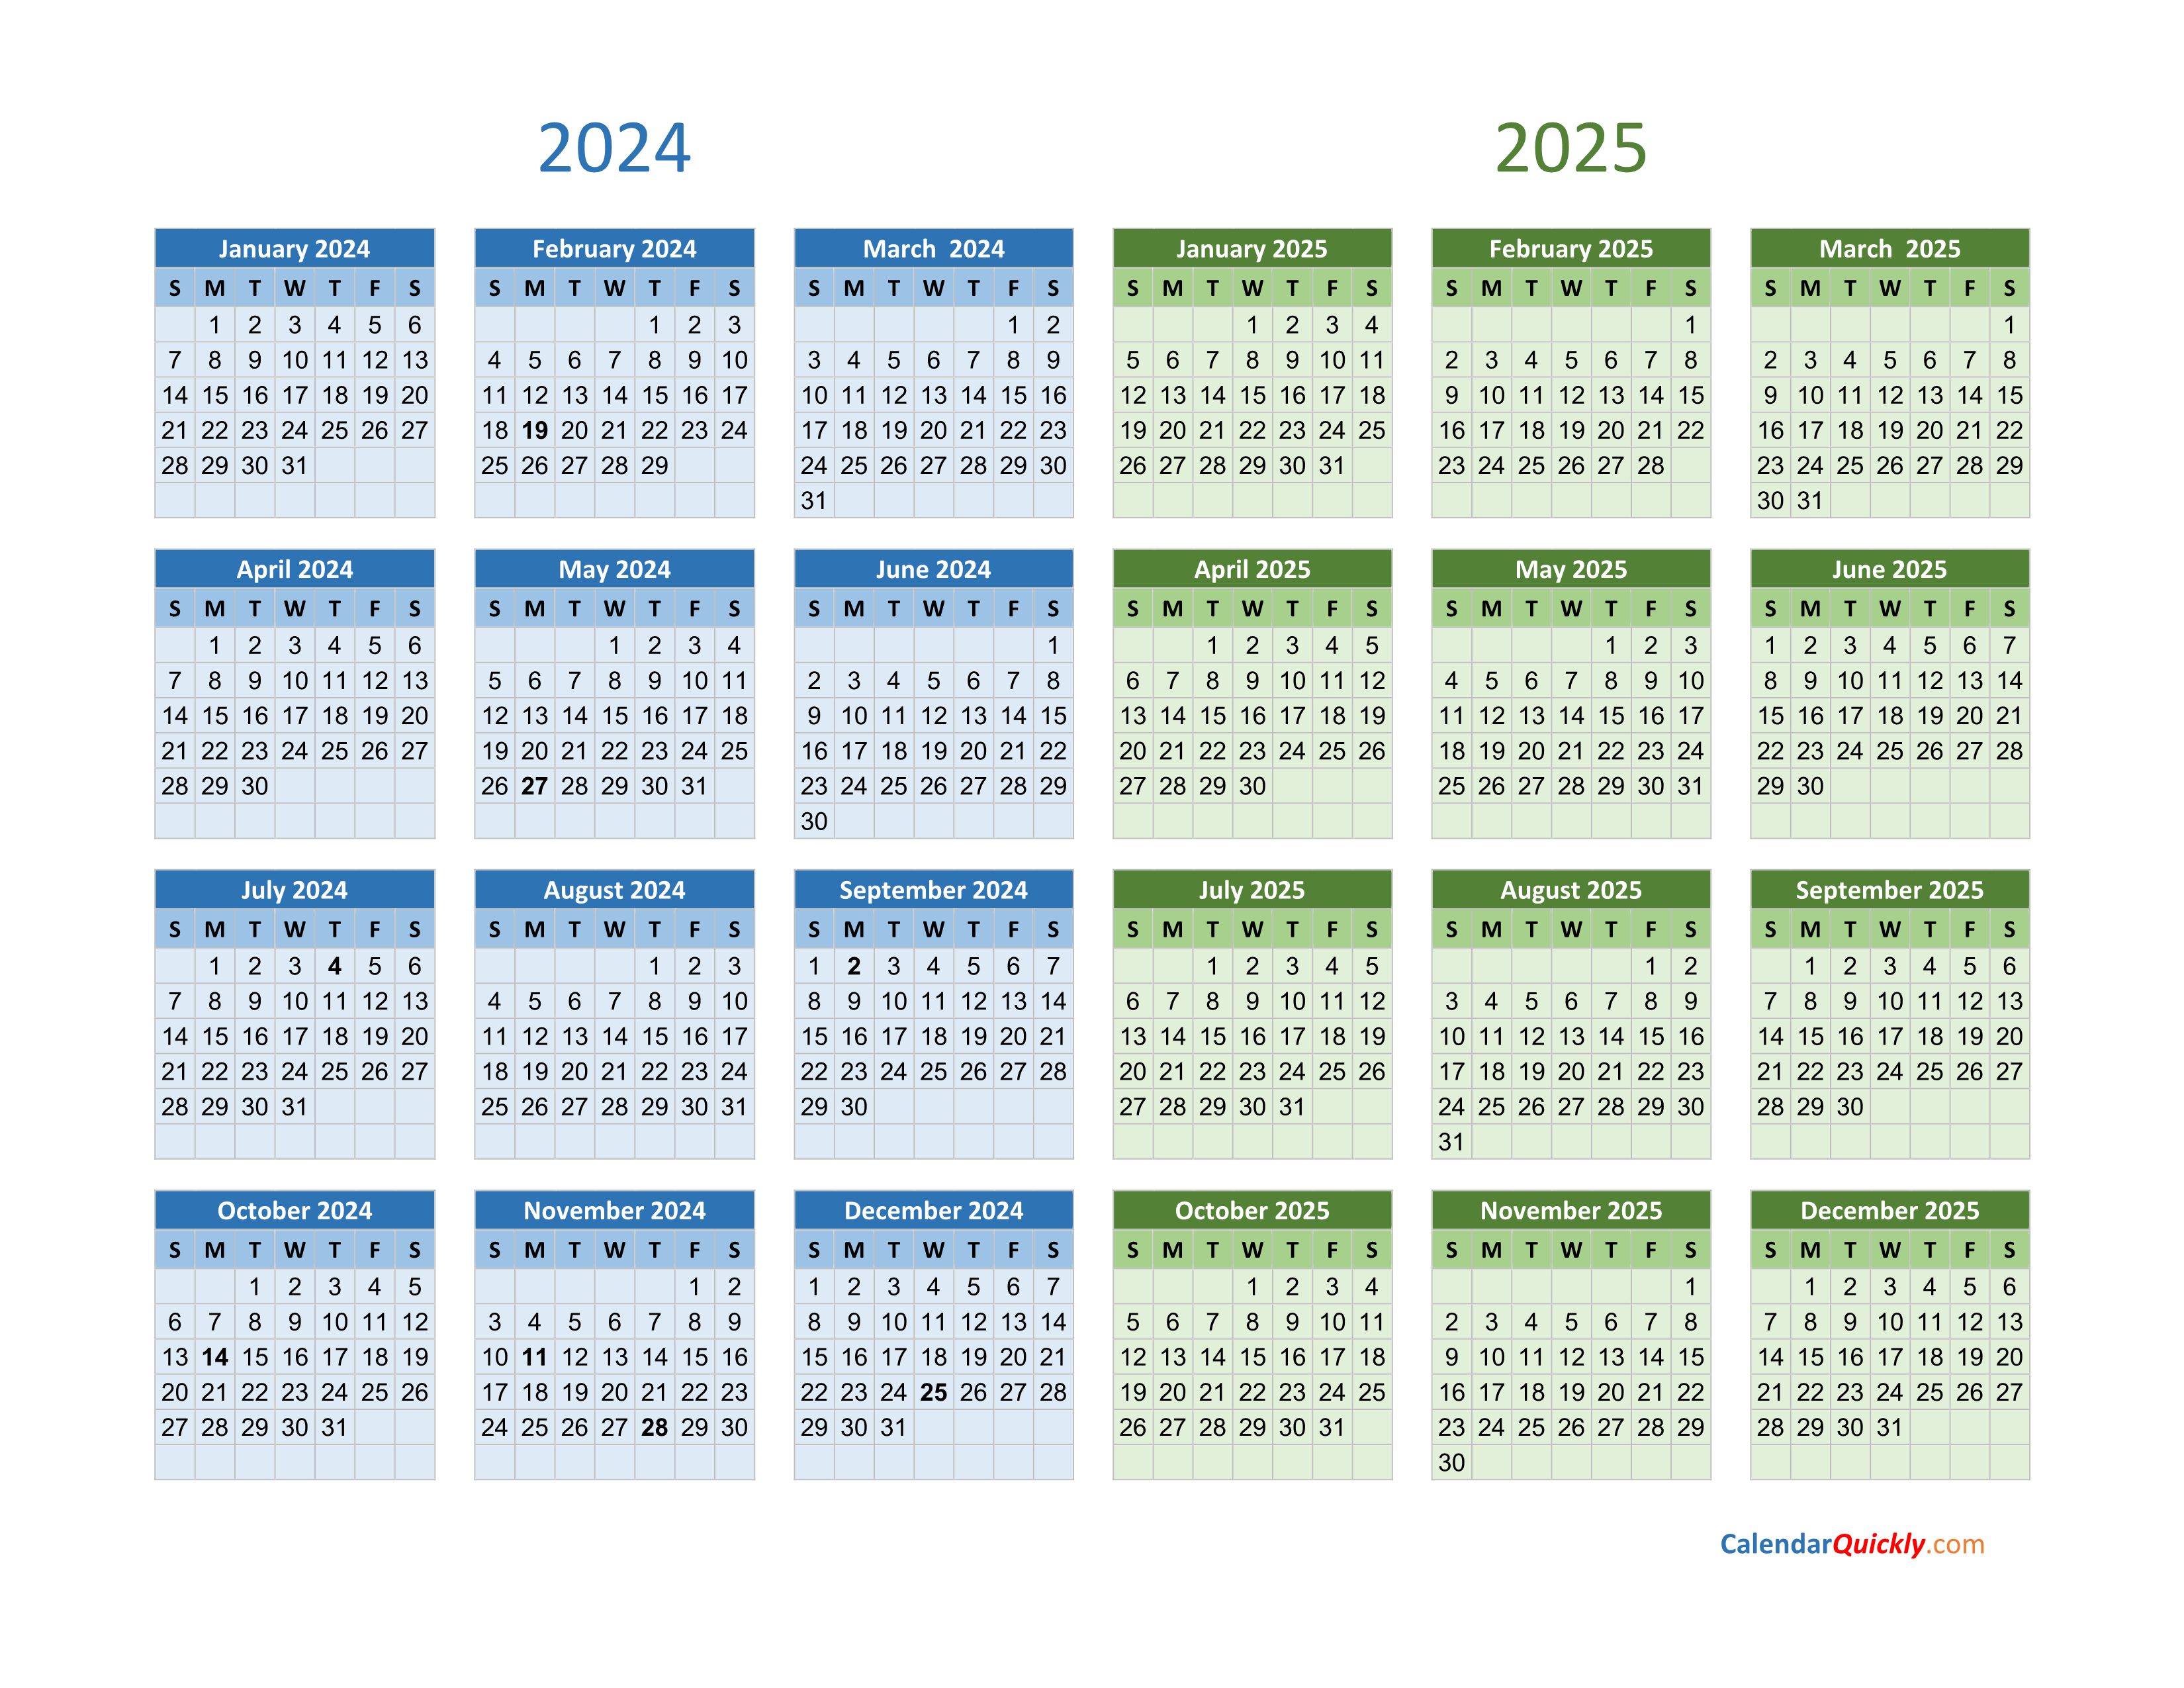 2024 And 2025 Calendar Calendar Quickly - Free Printable 2024-2025 Calendar Monthly